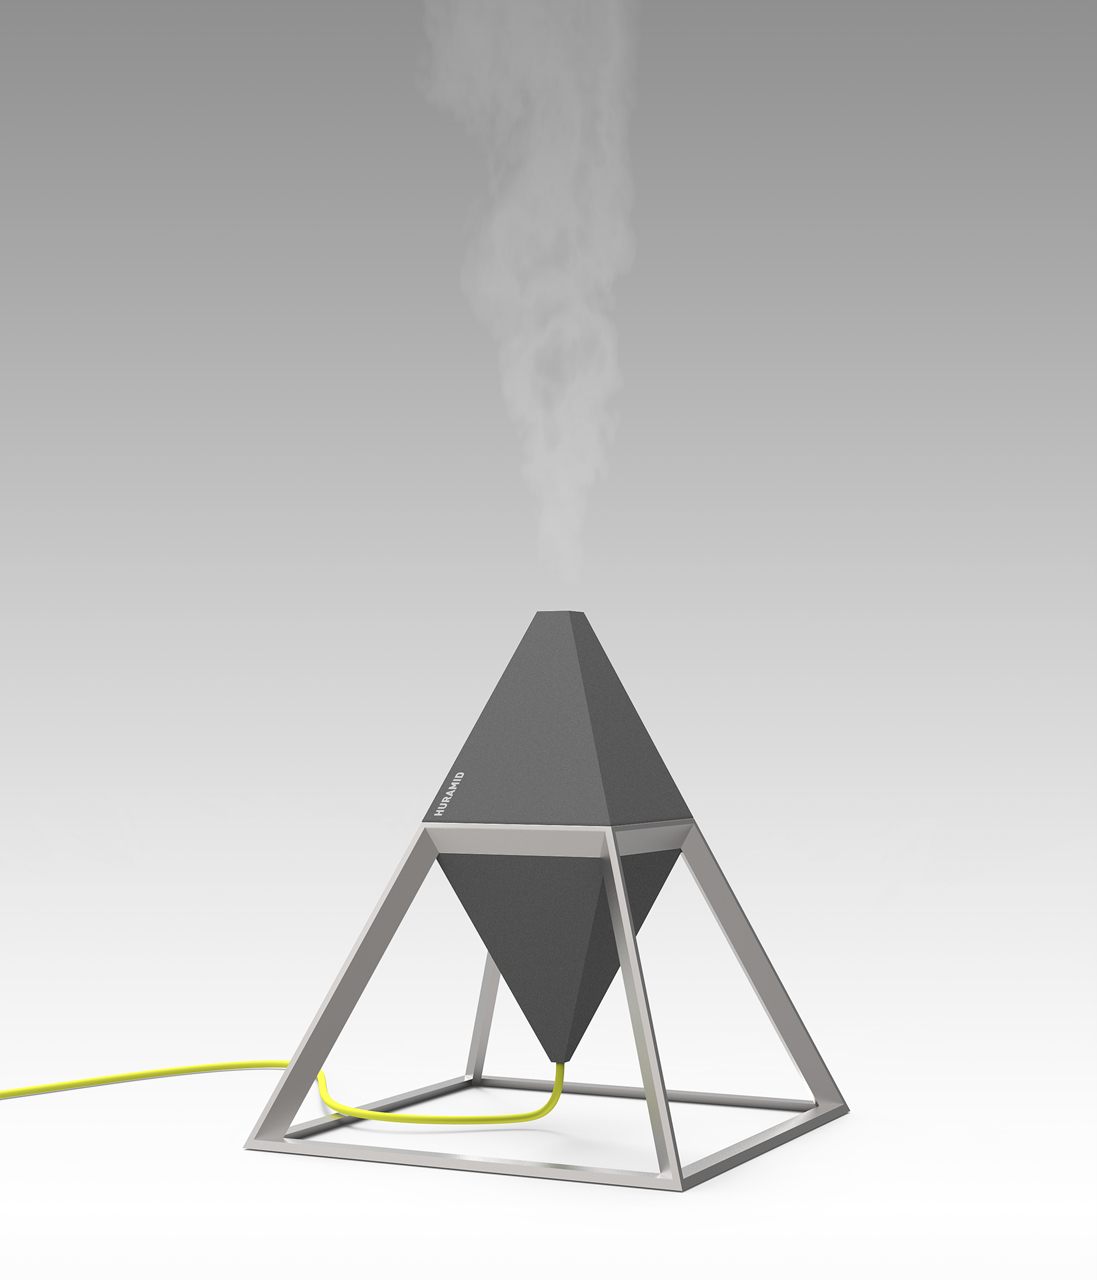 humidifier pyramid